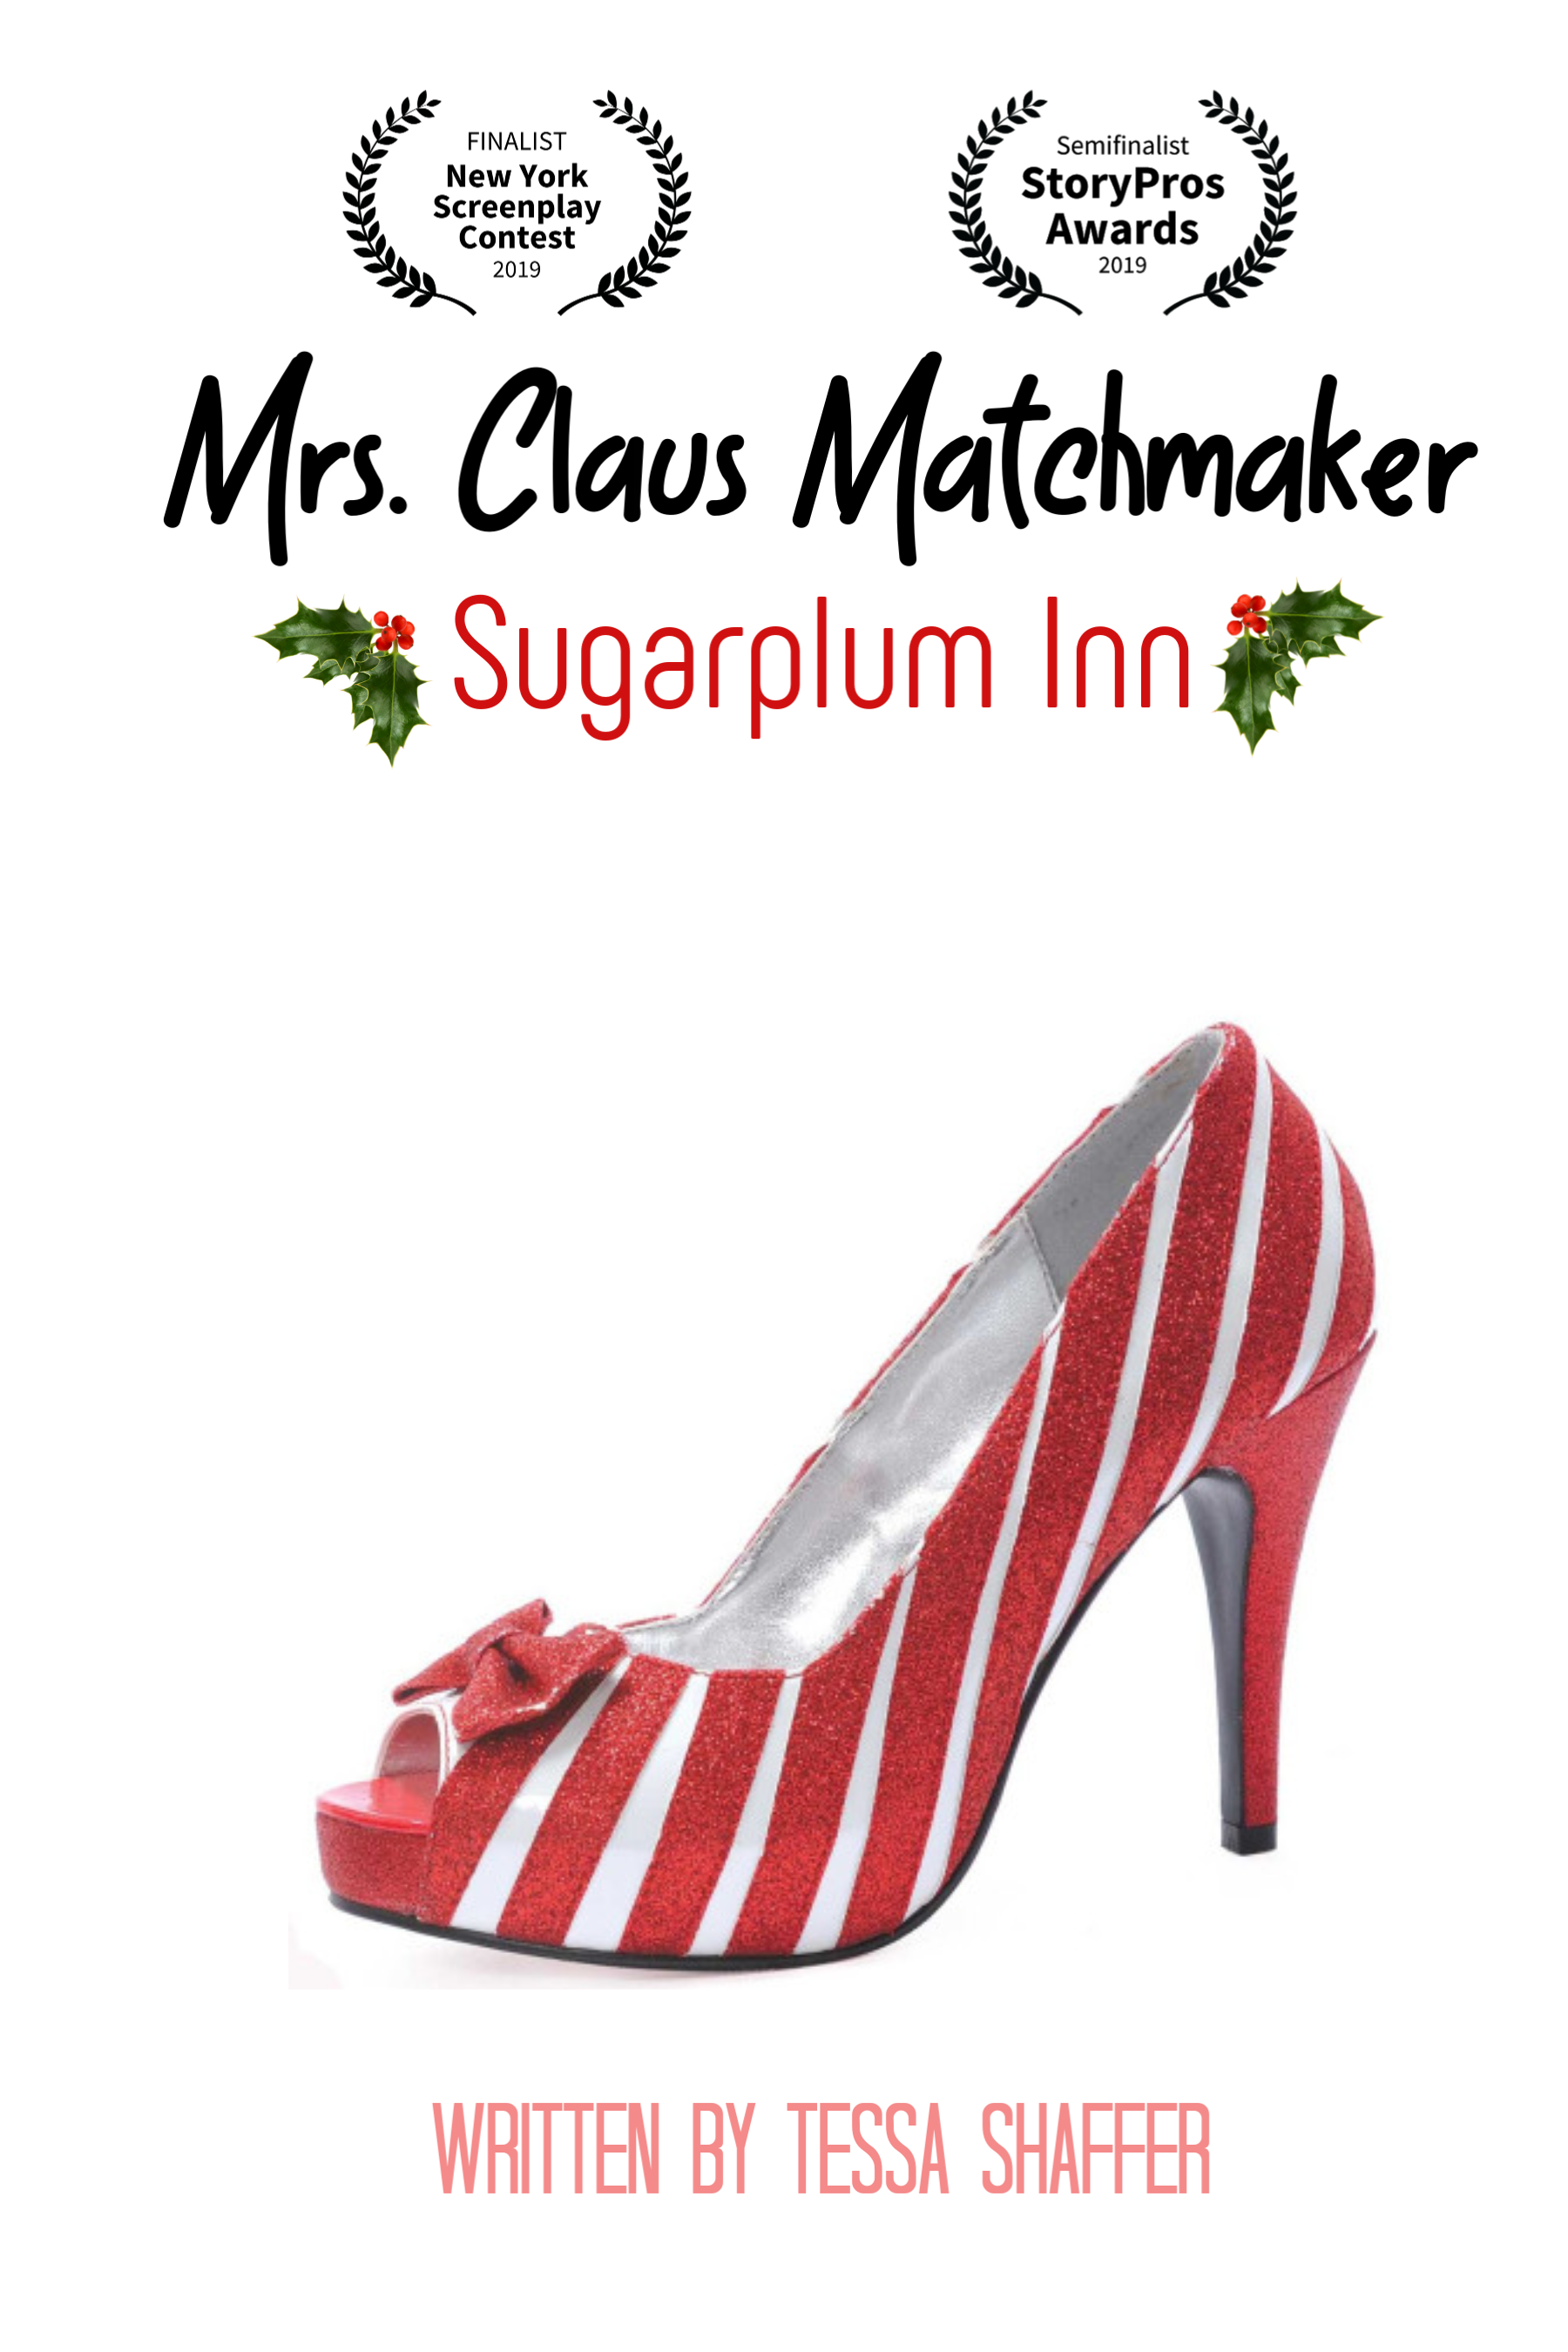 MRS. CLAUS MATCHMAKER: SUGARPLUM INN